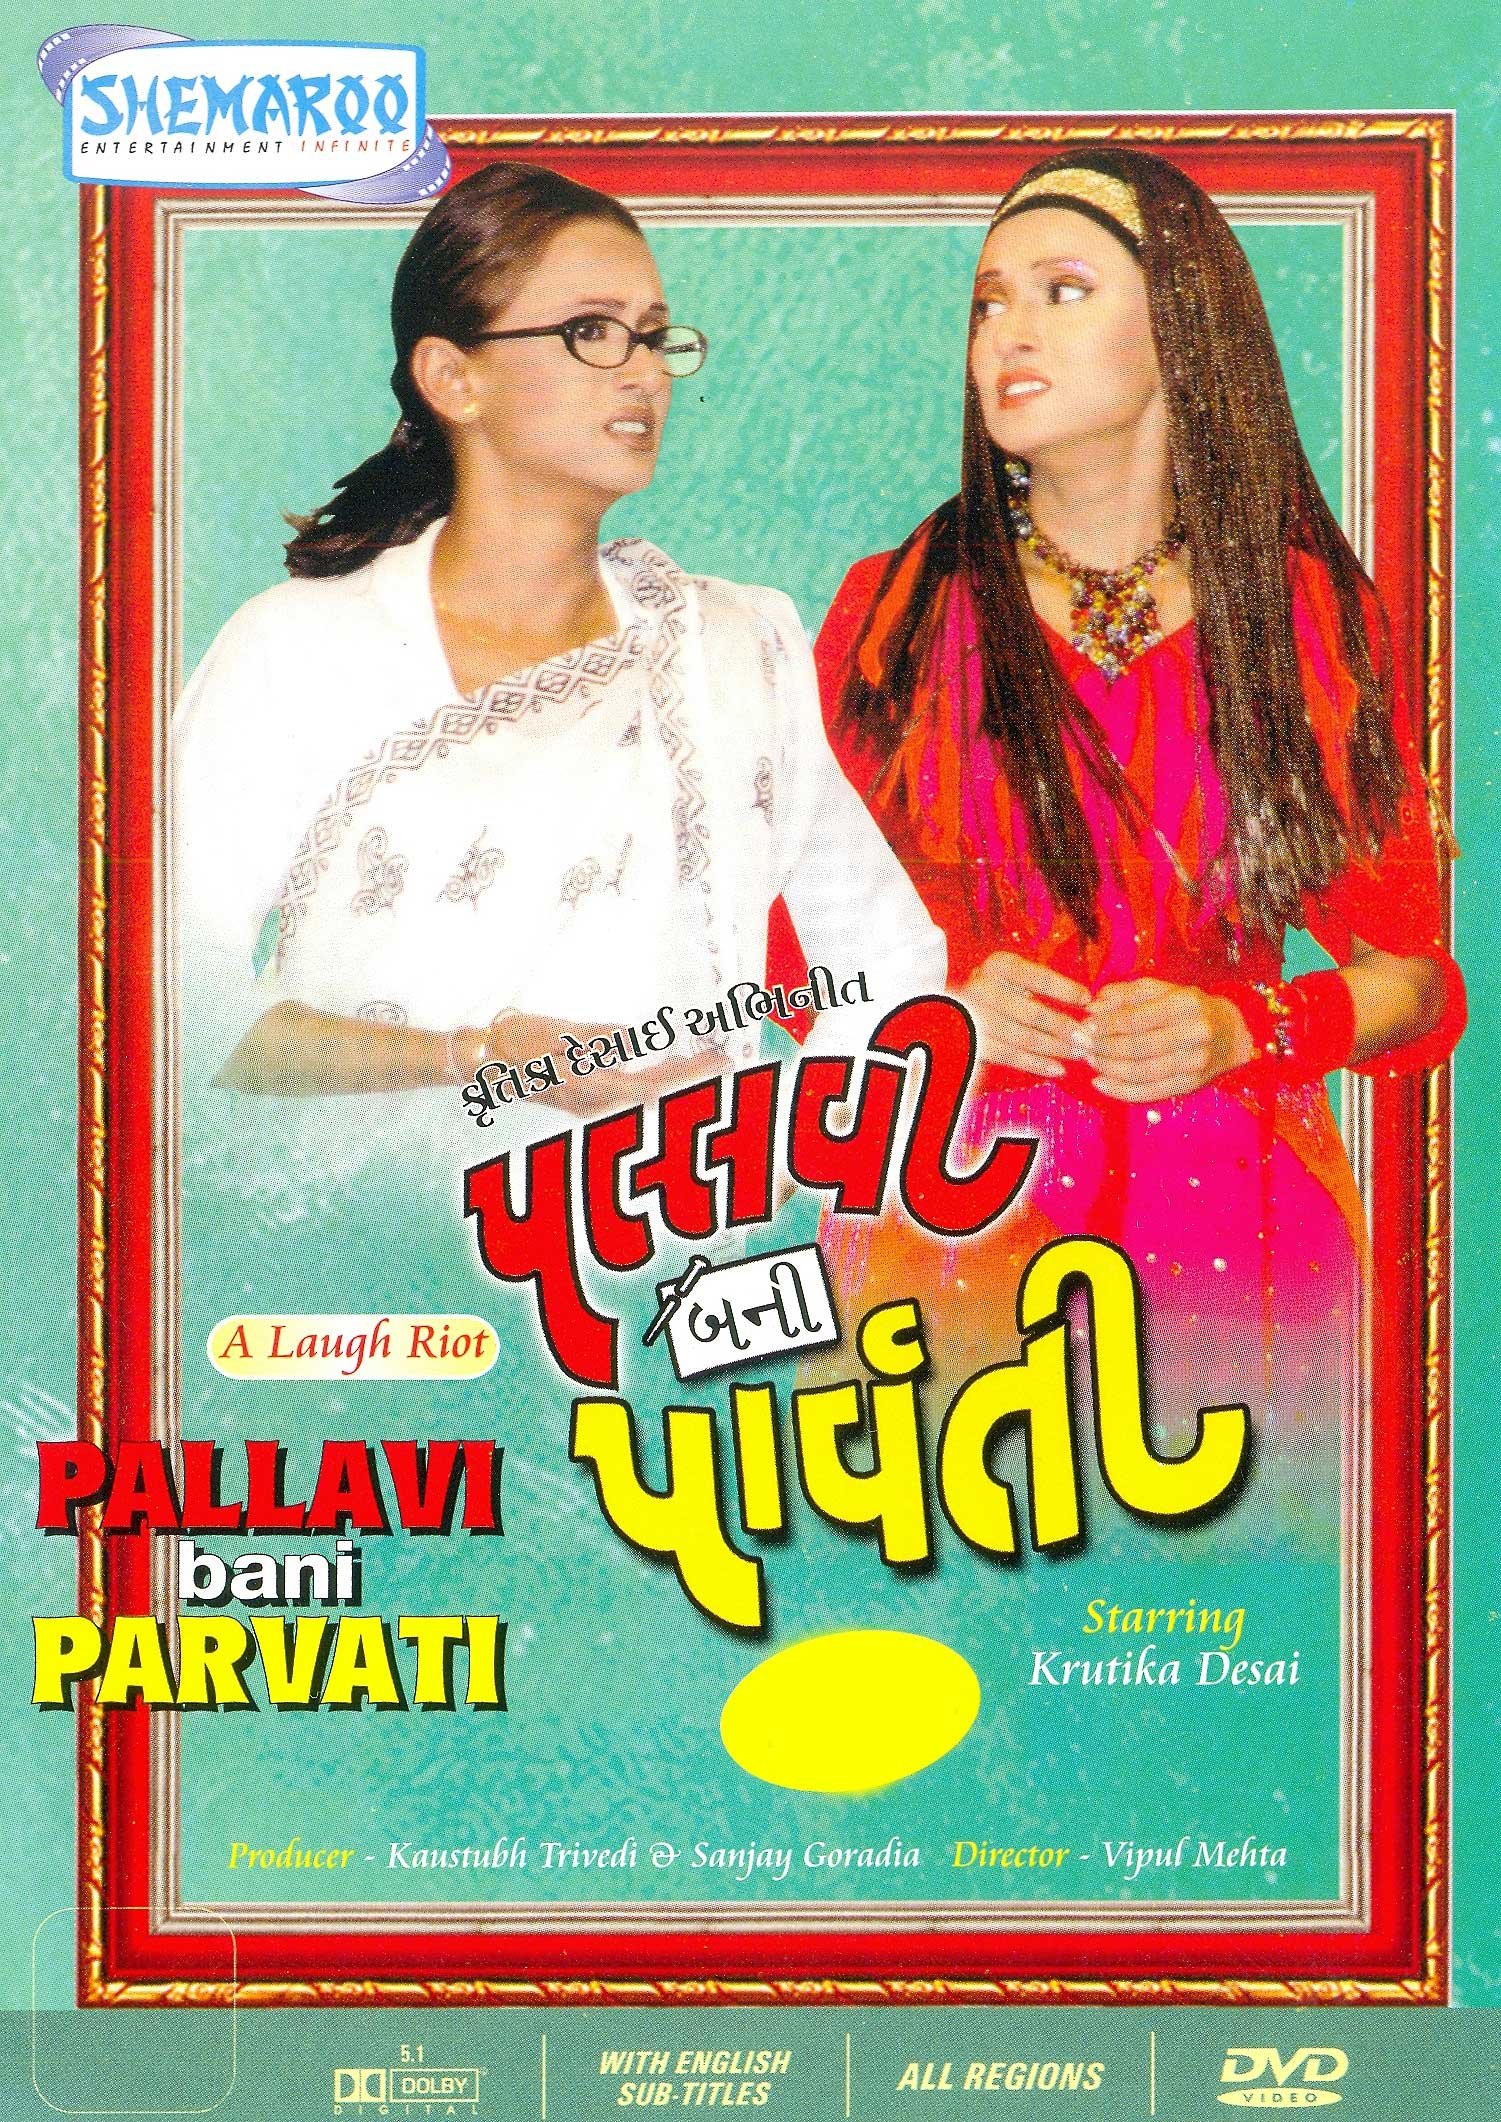 pallavi-bani-parvati-movie-purchase-or-watch-online